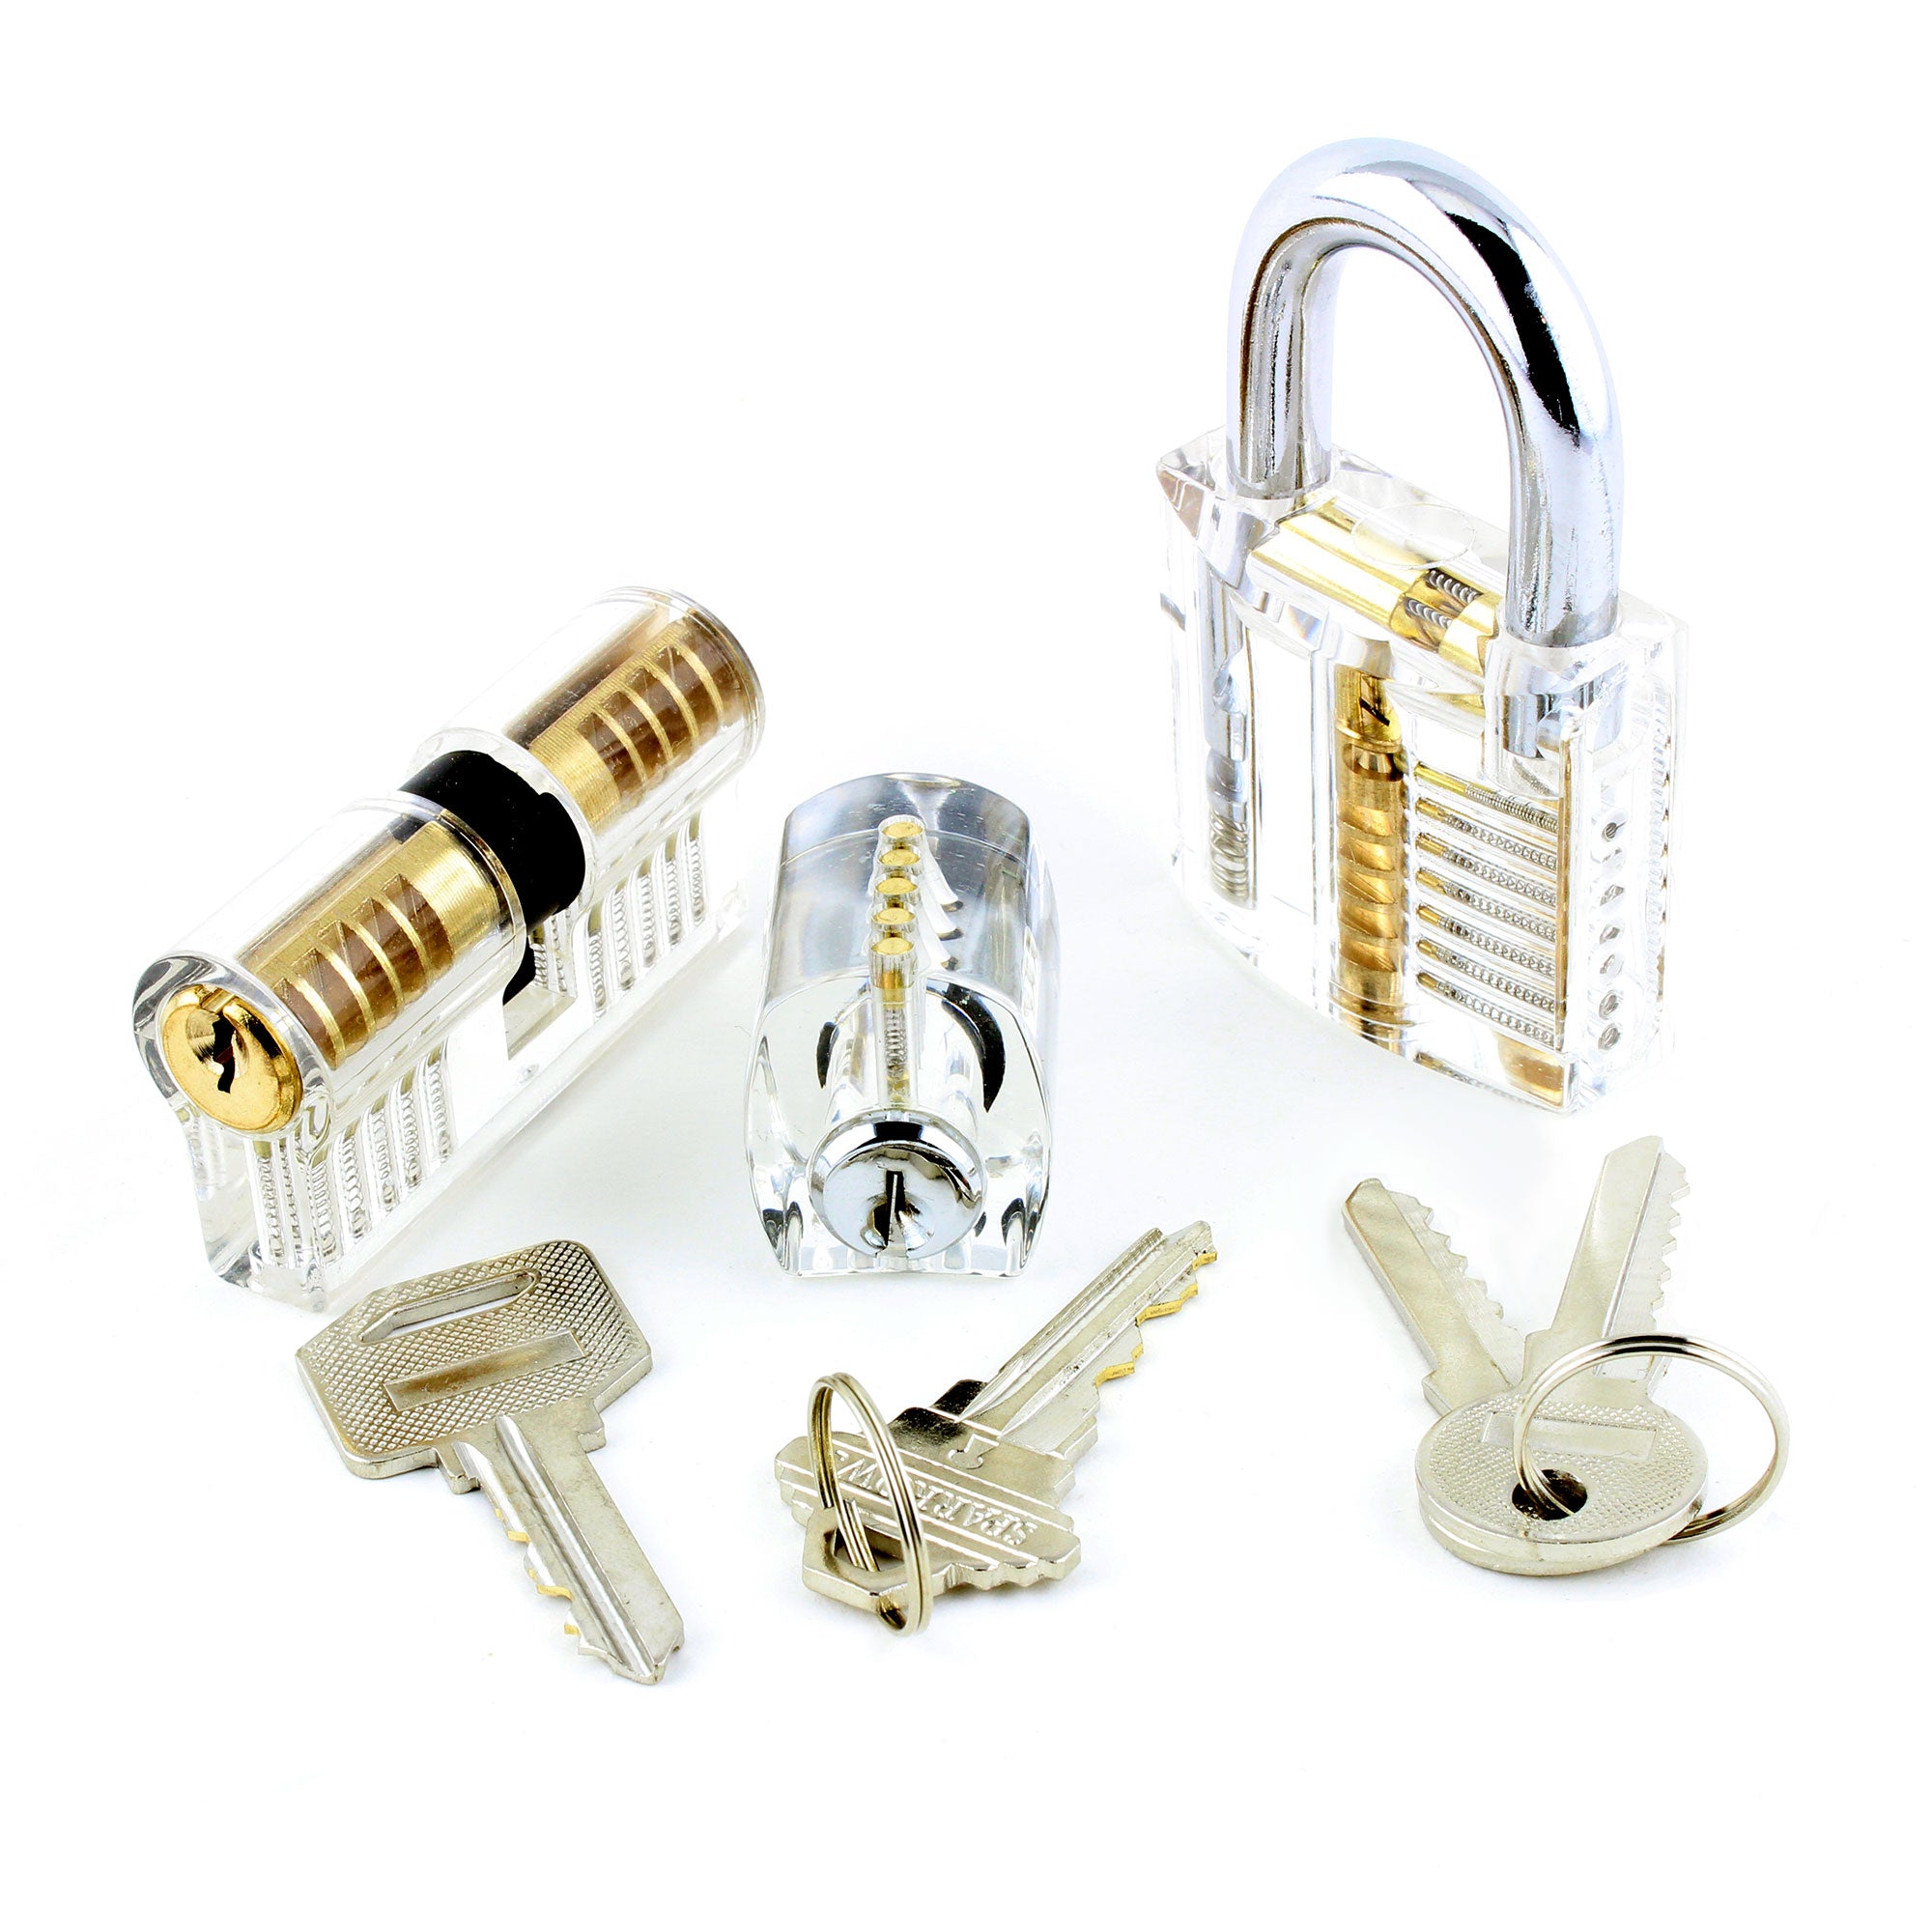 Clear Padlock for lock pick training - medium difficulty